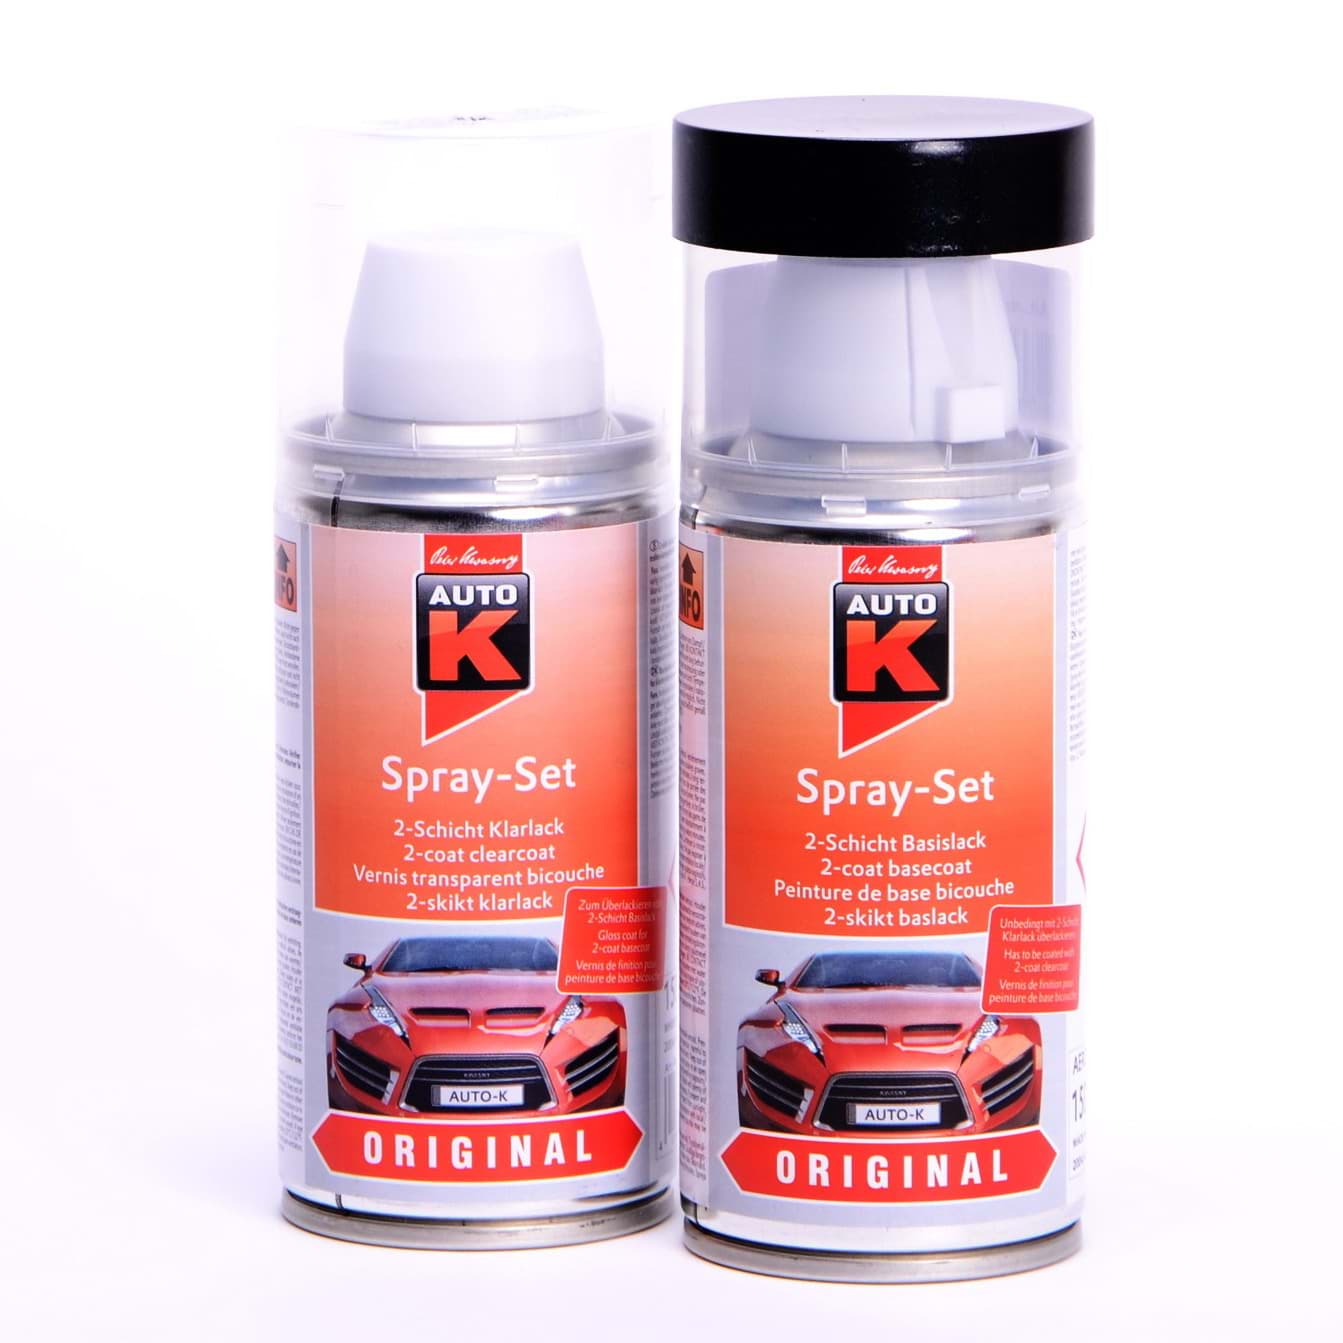 Afbeelding van Auto-K Spray-Set Autolack für Opel 286 / 29U Keramikblau met 21399